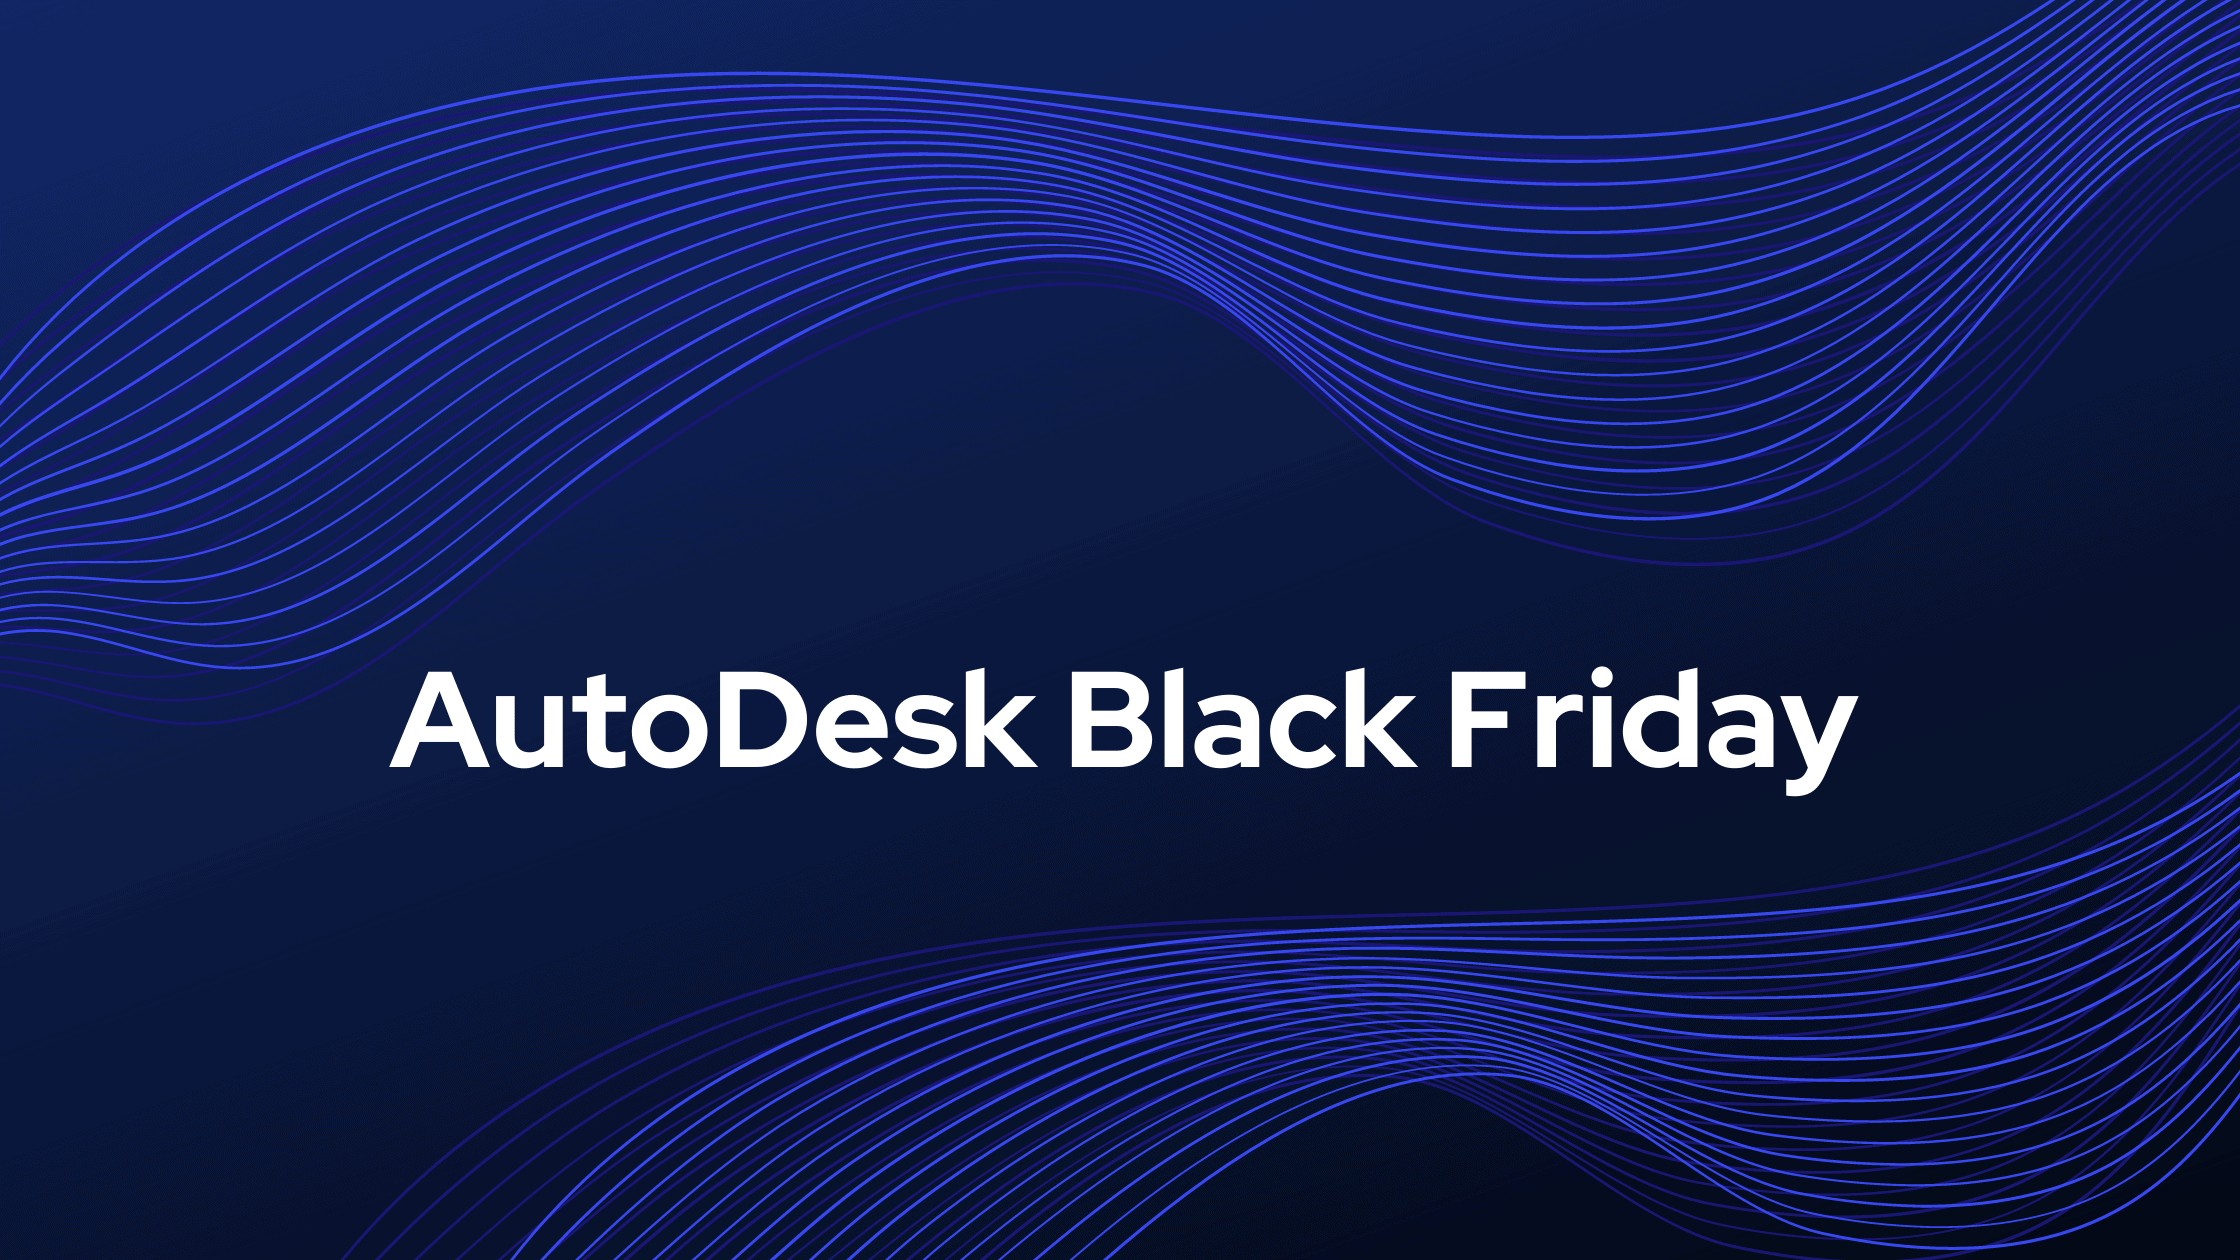 Autodesk Black Friday Deals